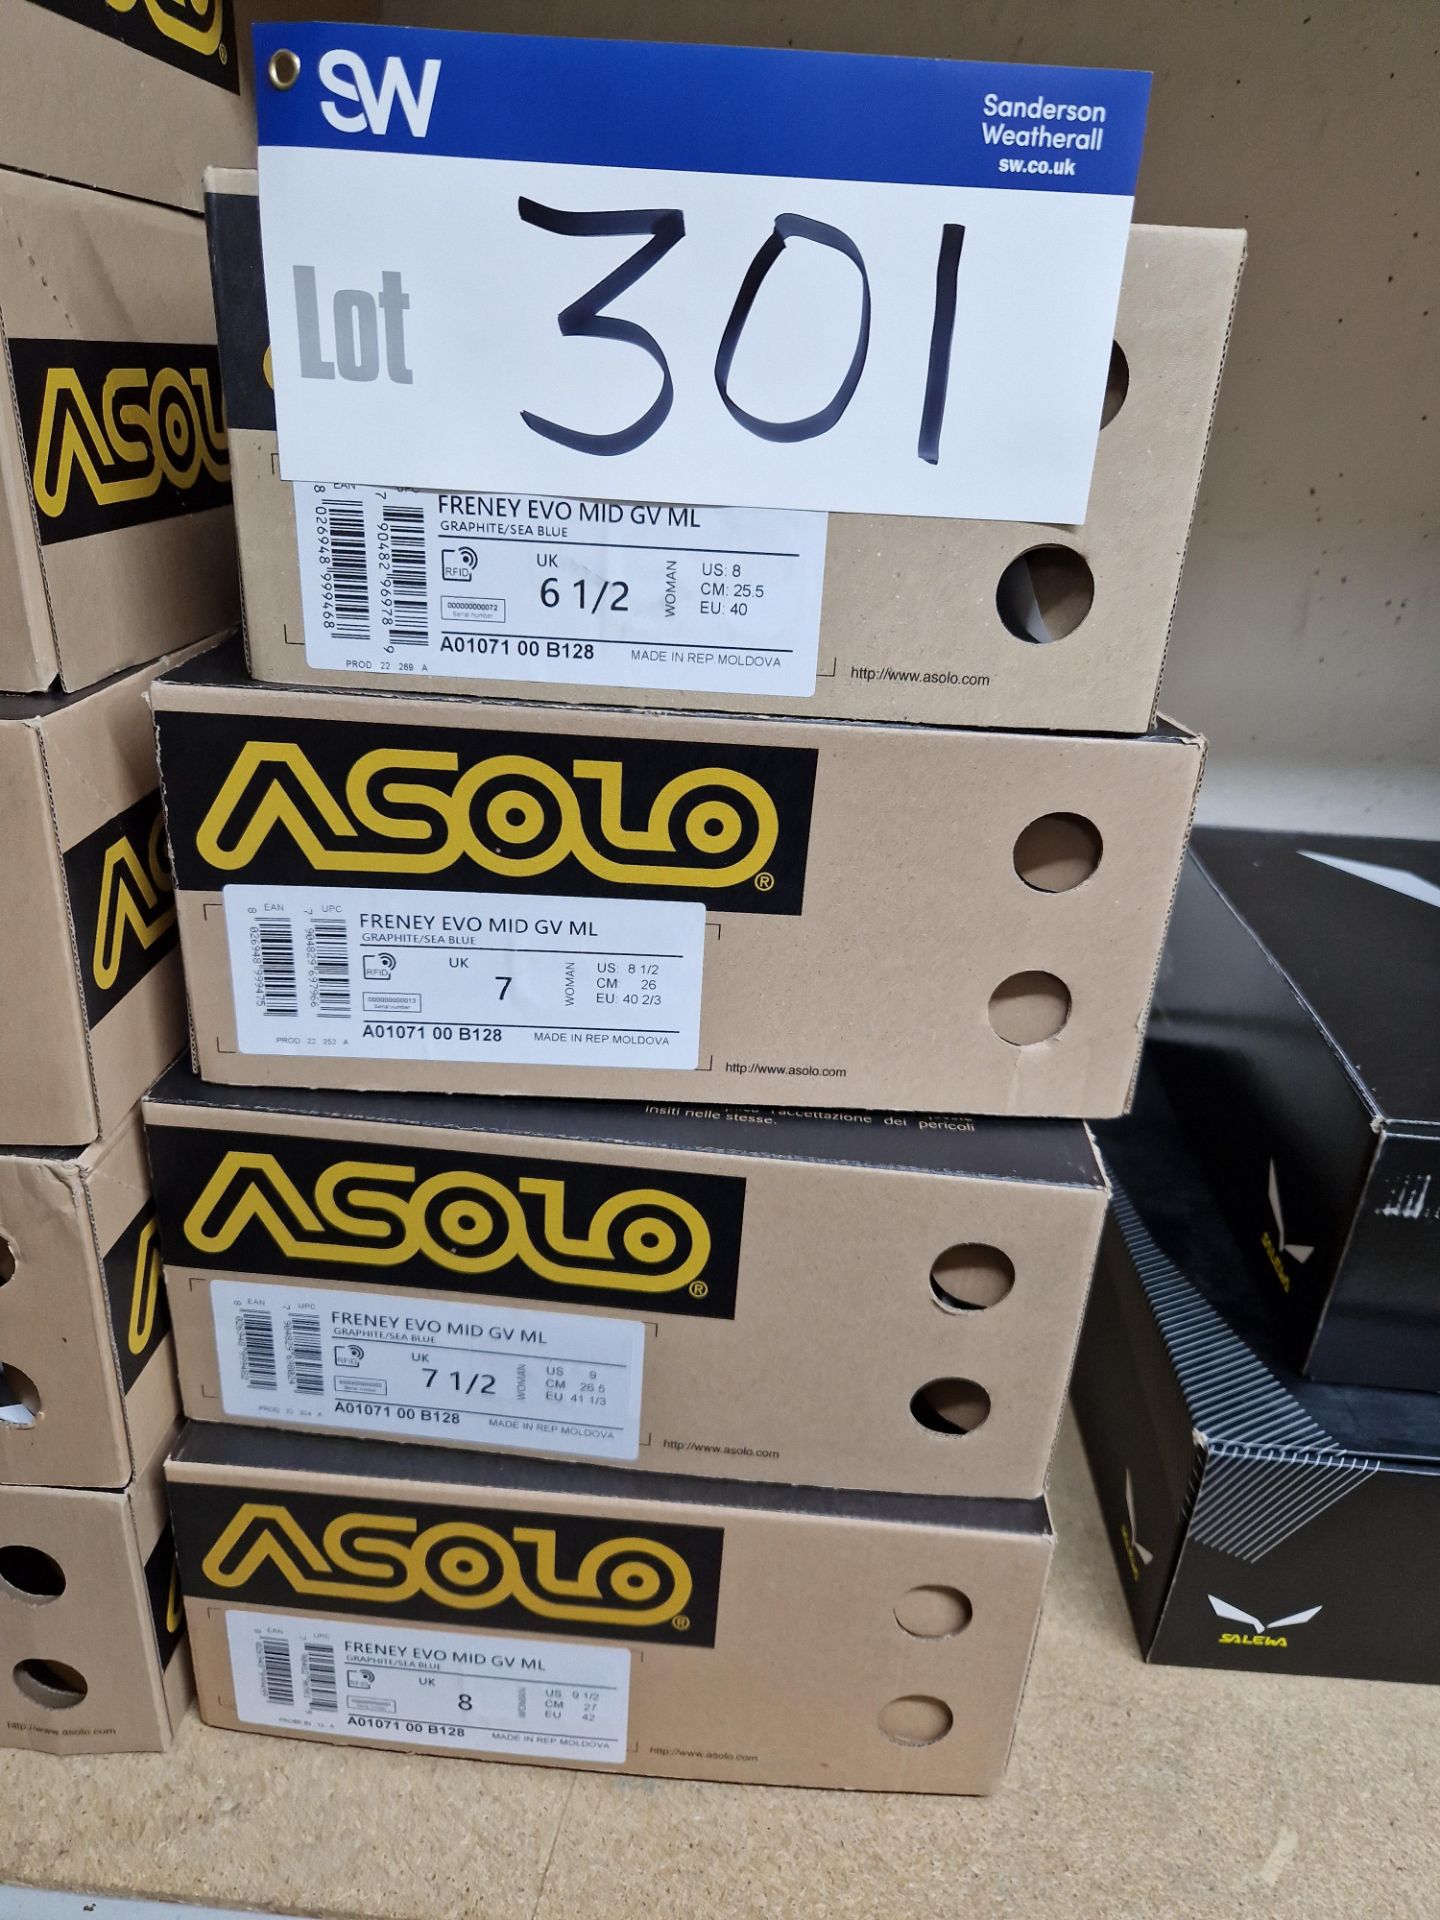 Four Pairs of Asolo Freney EVO MID GV ML Boots, Colour: Graphite/Sea Blue, Sizes: 8 UK, 7.5 UK, 7